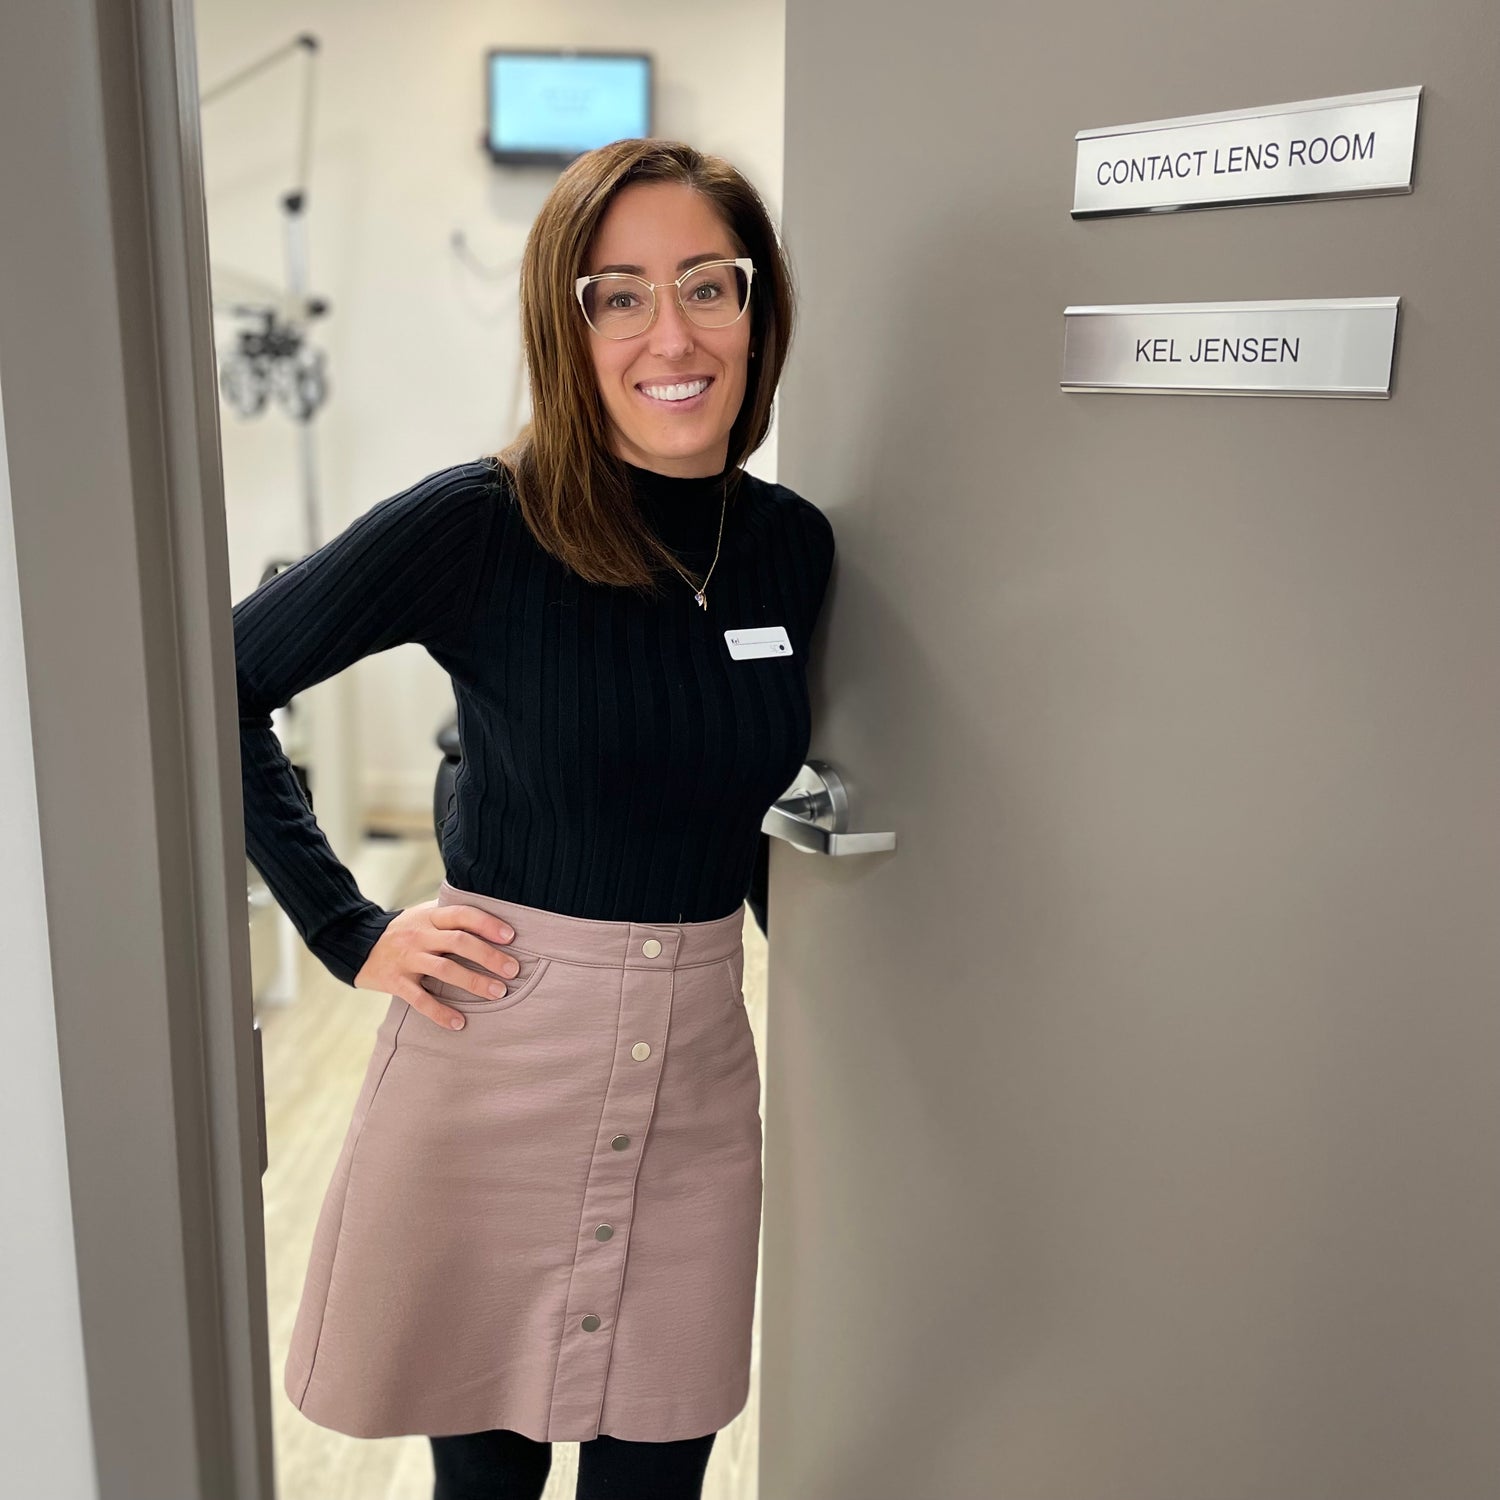 Friendly, smiling clinician standing at the doorway to an eye exam room. Door sign says Contact Lens Room, Kel Jensen.